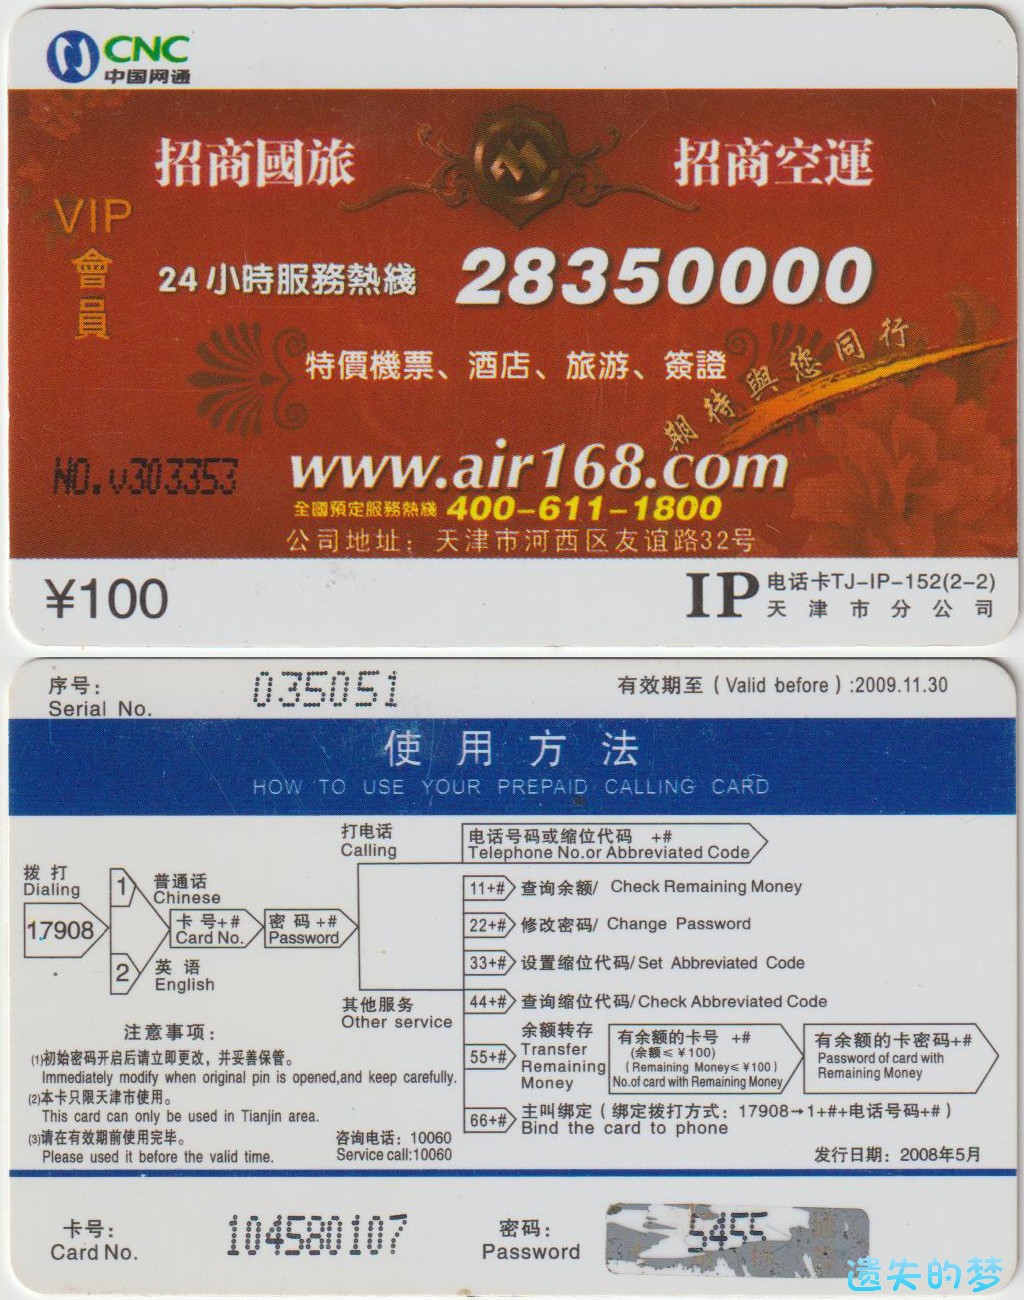 IP电话卡TJ-IP-152(2-2).jpg